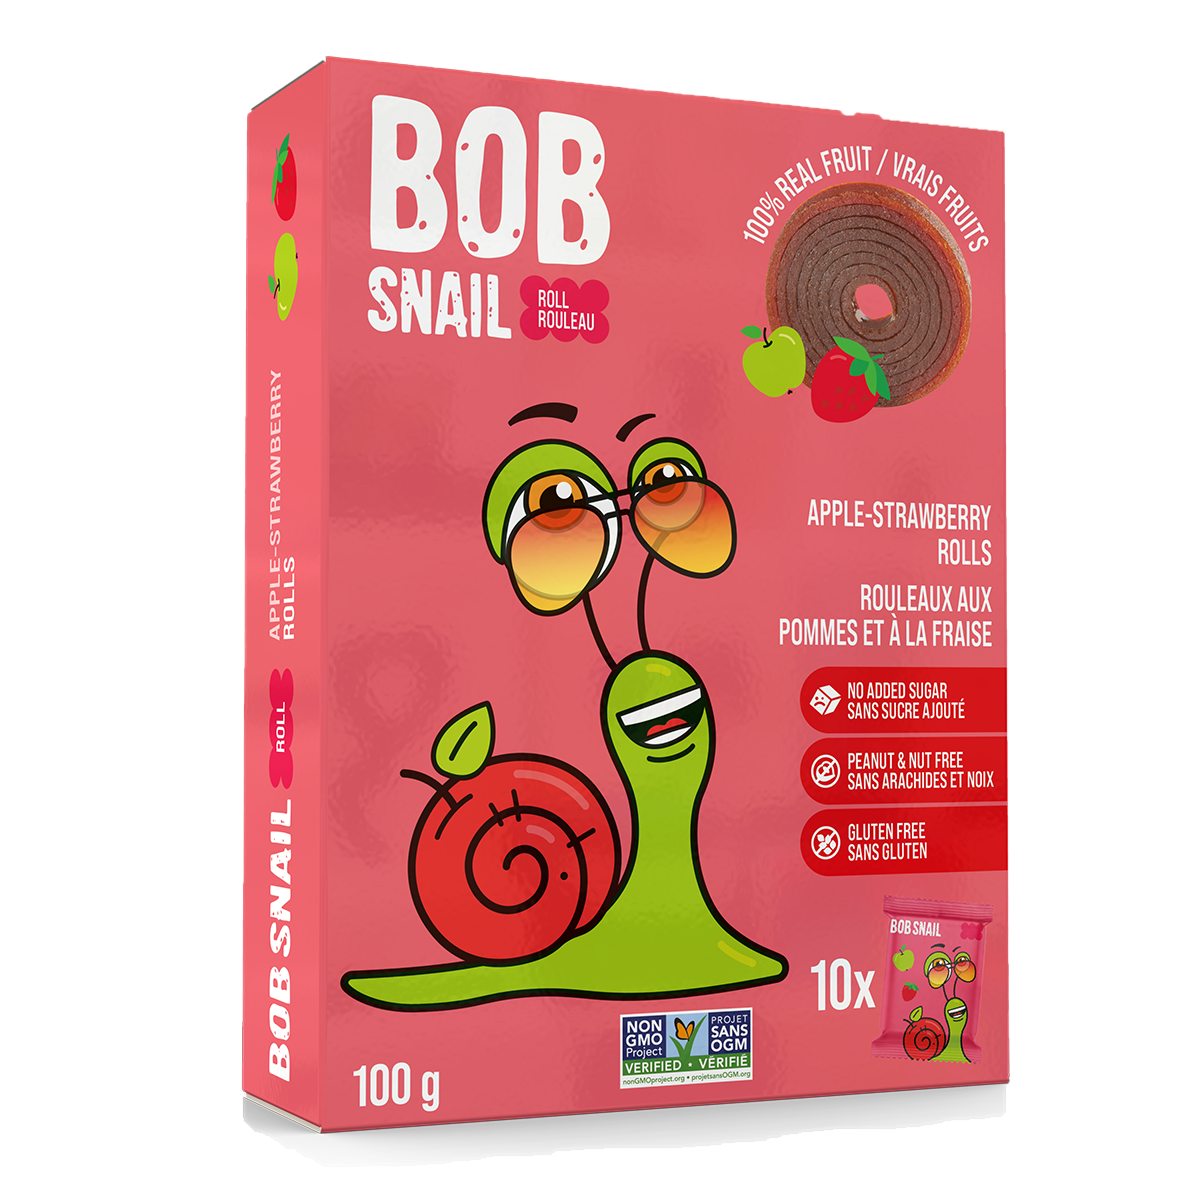 Bob Snail Apple Strawberry 10 Count 100g